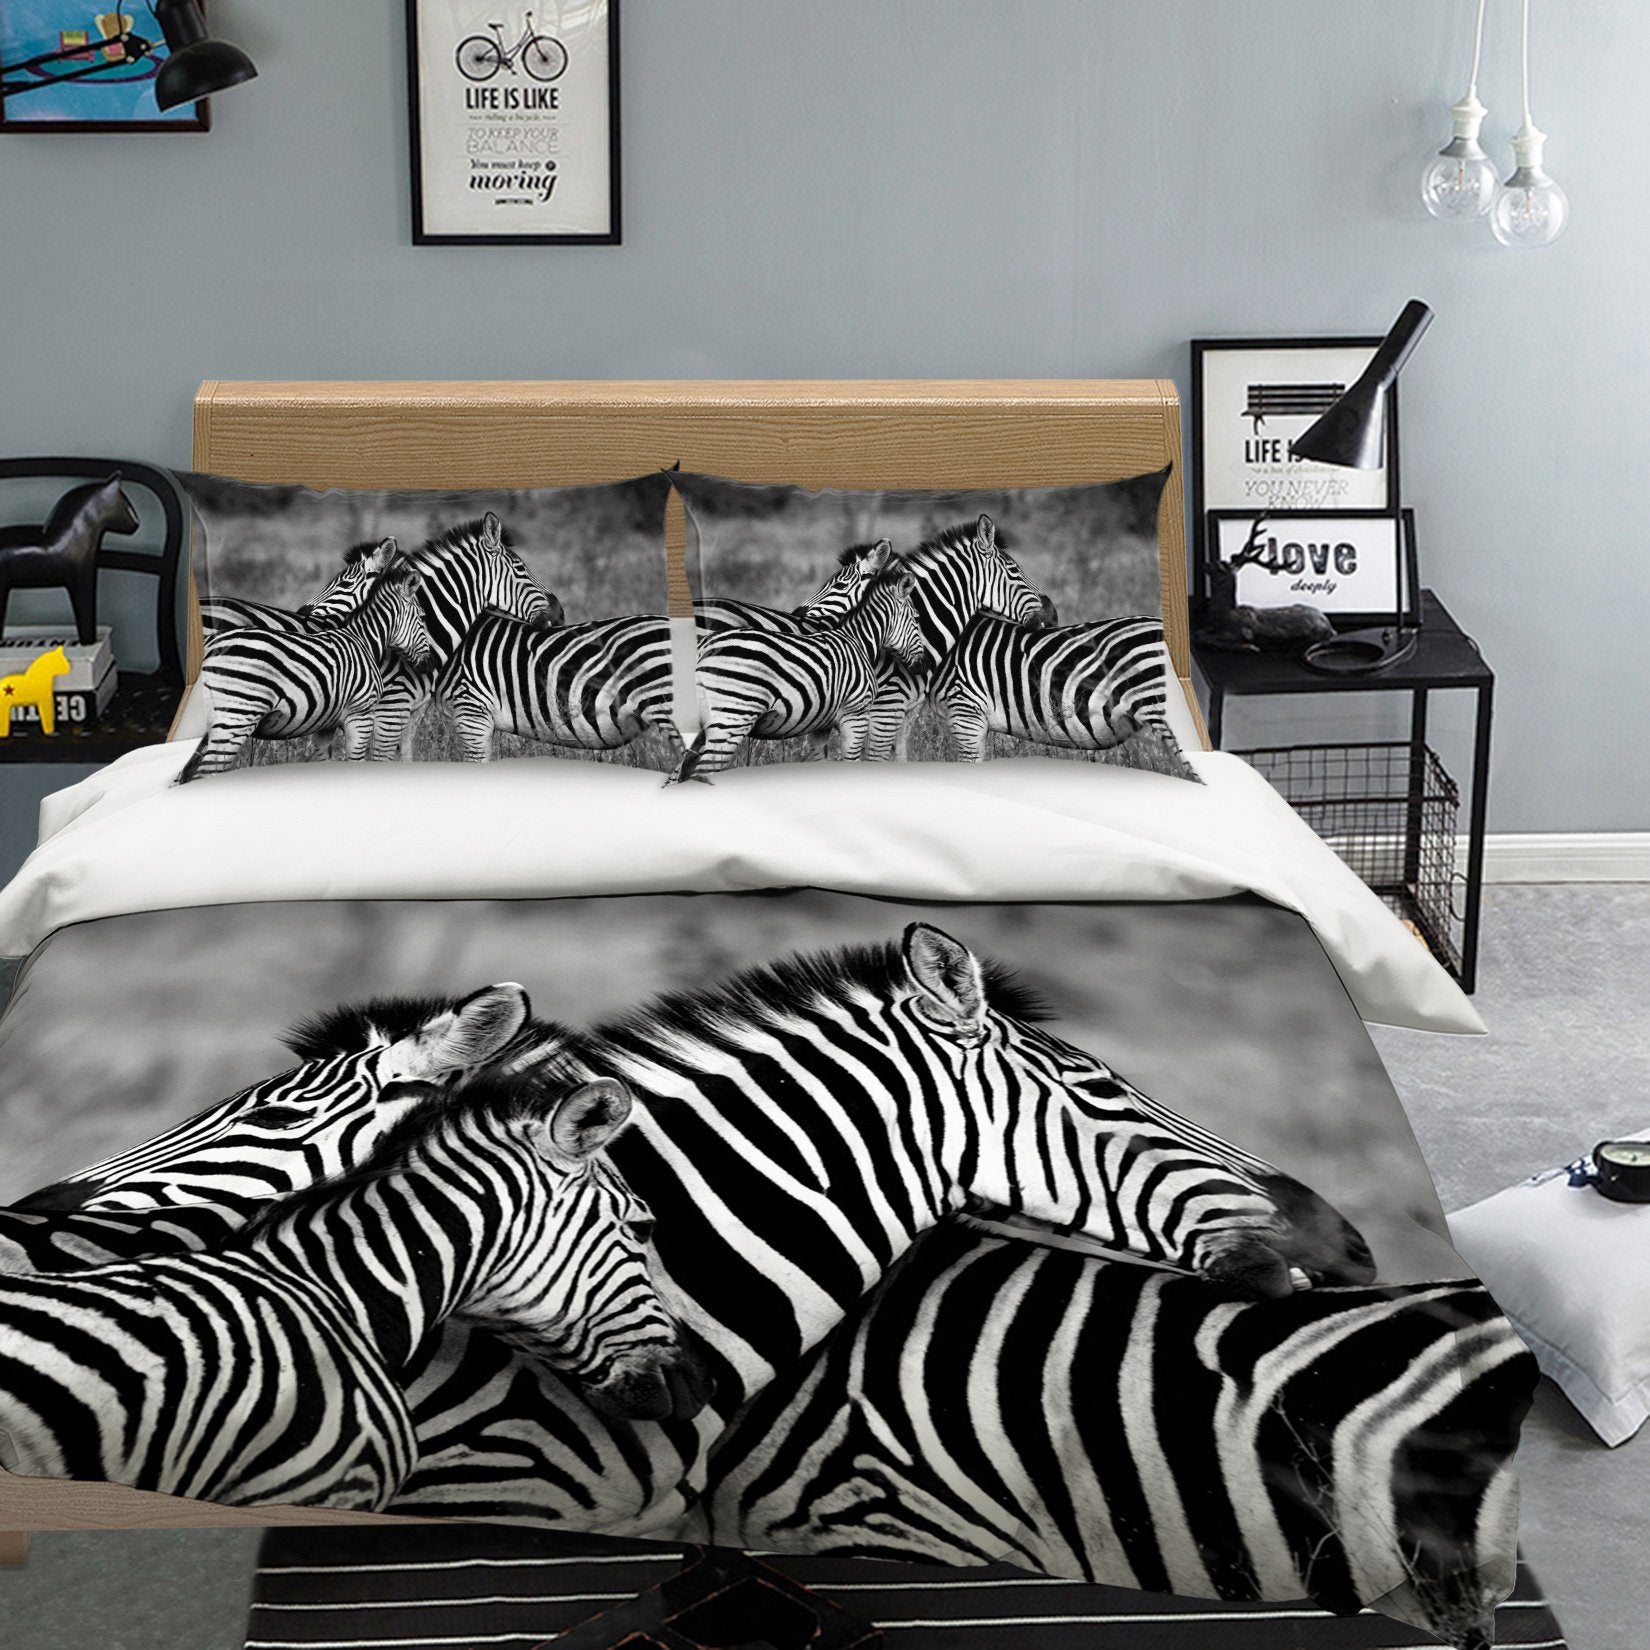 3D Zebra 2013 Bed Pillowcases Quilt Quiet Covers AJ Creativity Home 